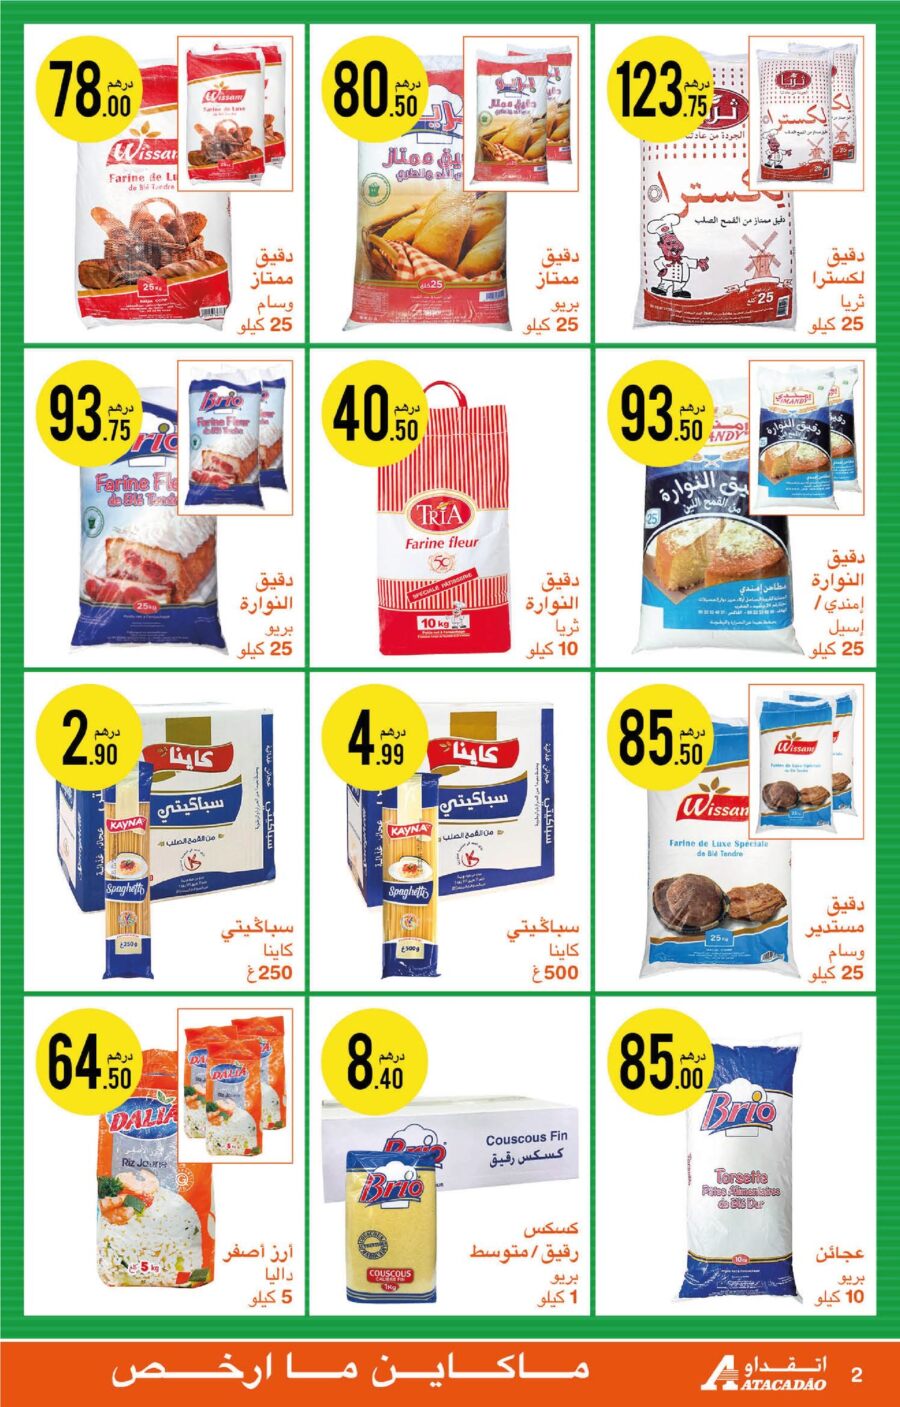 Catalogue Atacadao magasin Kenitra valable du 9 au 22 décembre 2021